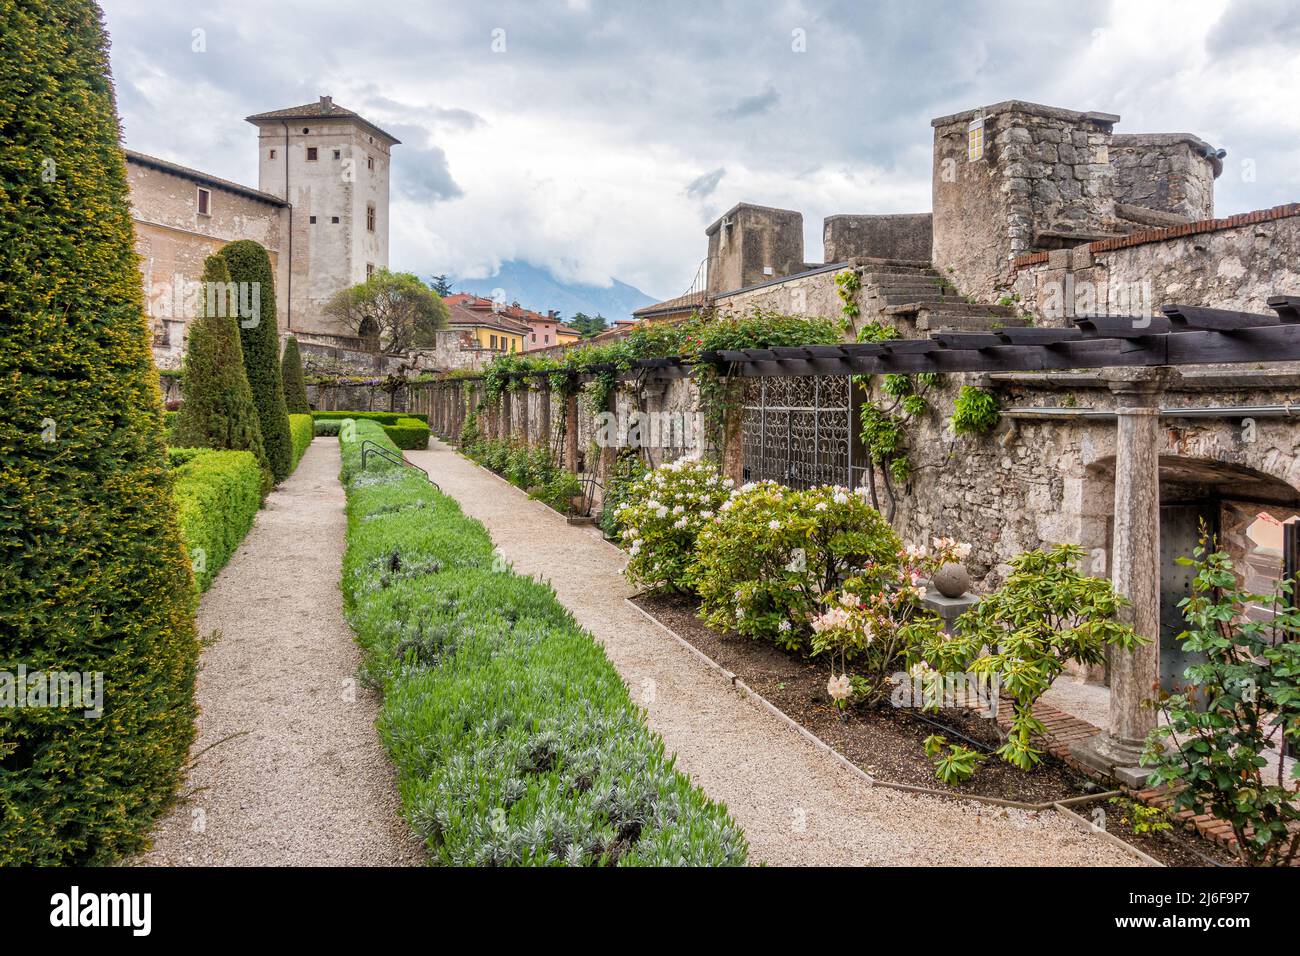 El hermoso Castello del Buonconsiglio, en Trento, Trentino Alto Adige, al norte de Italia. Foto de stock